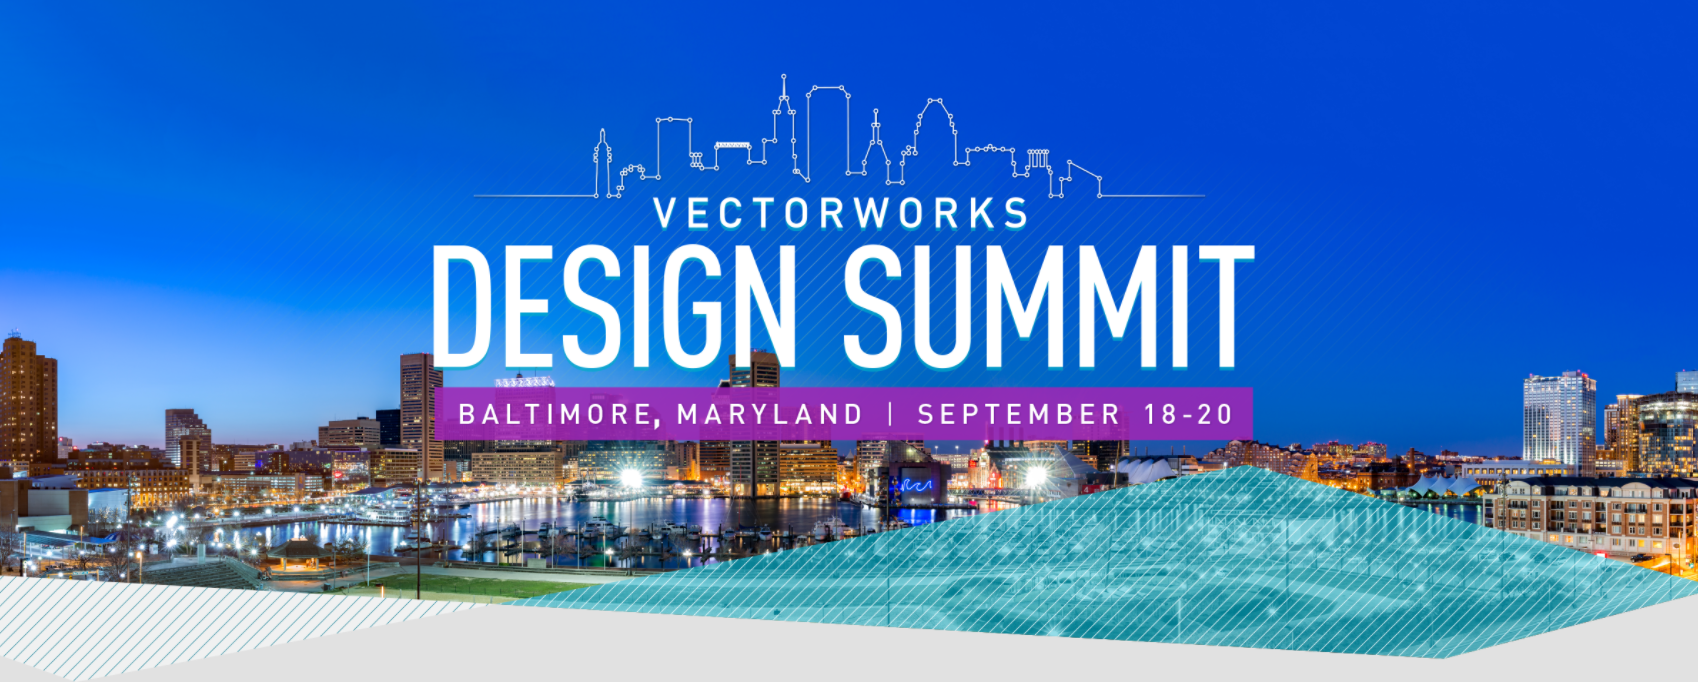 Registration Opens for 2017 Vectorworks Design Summit